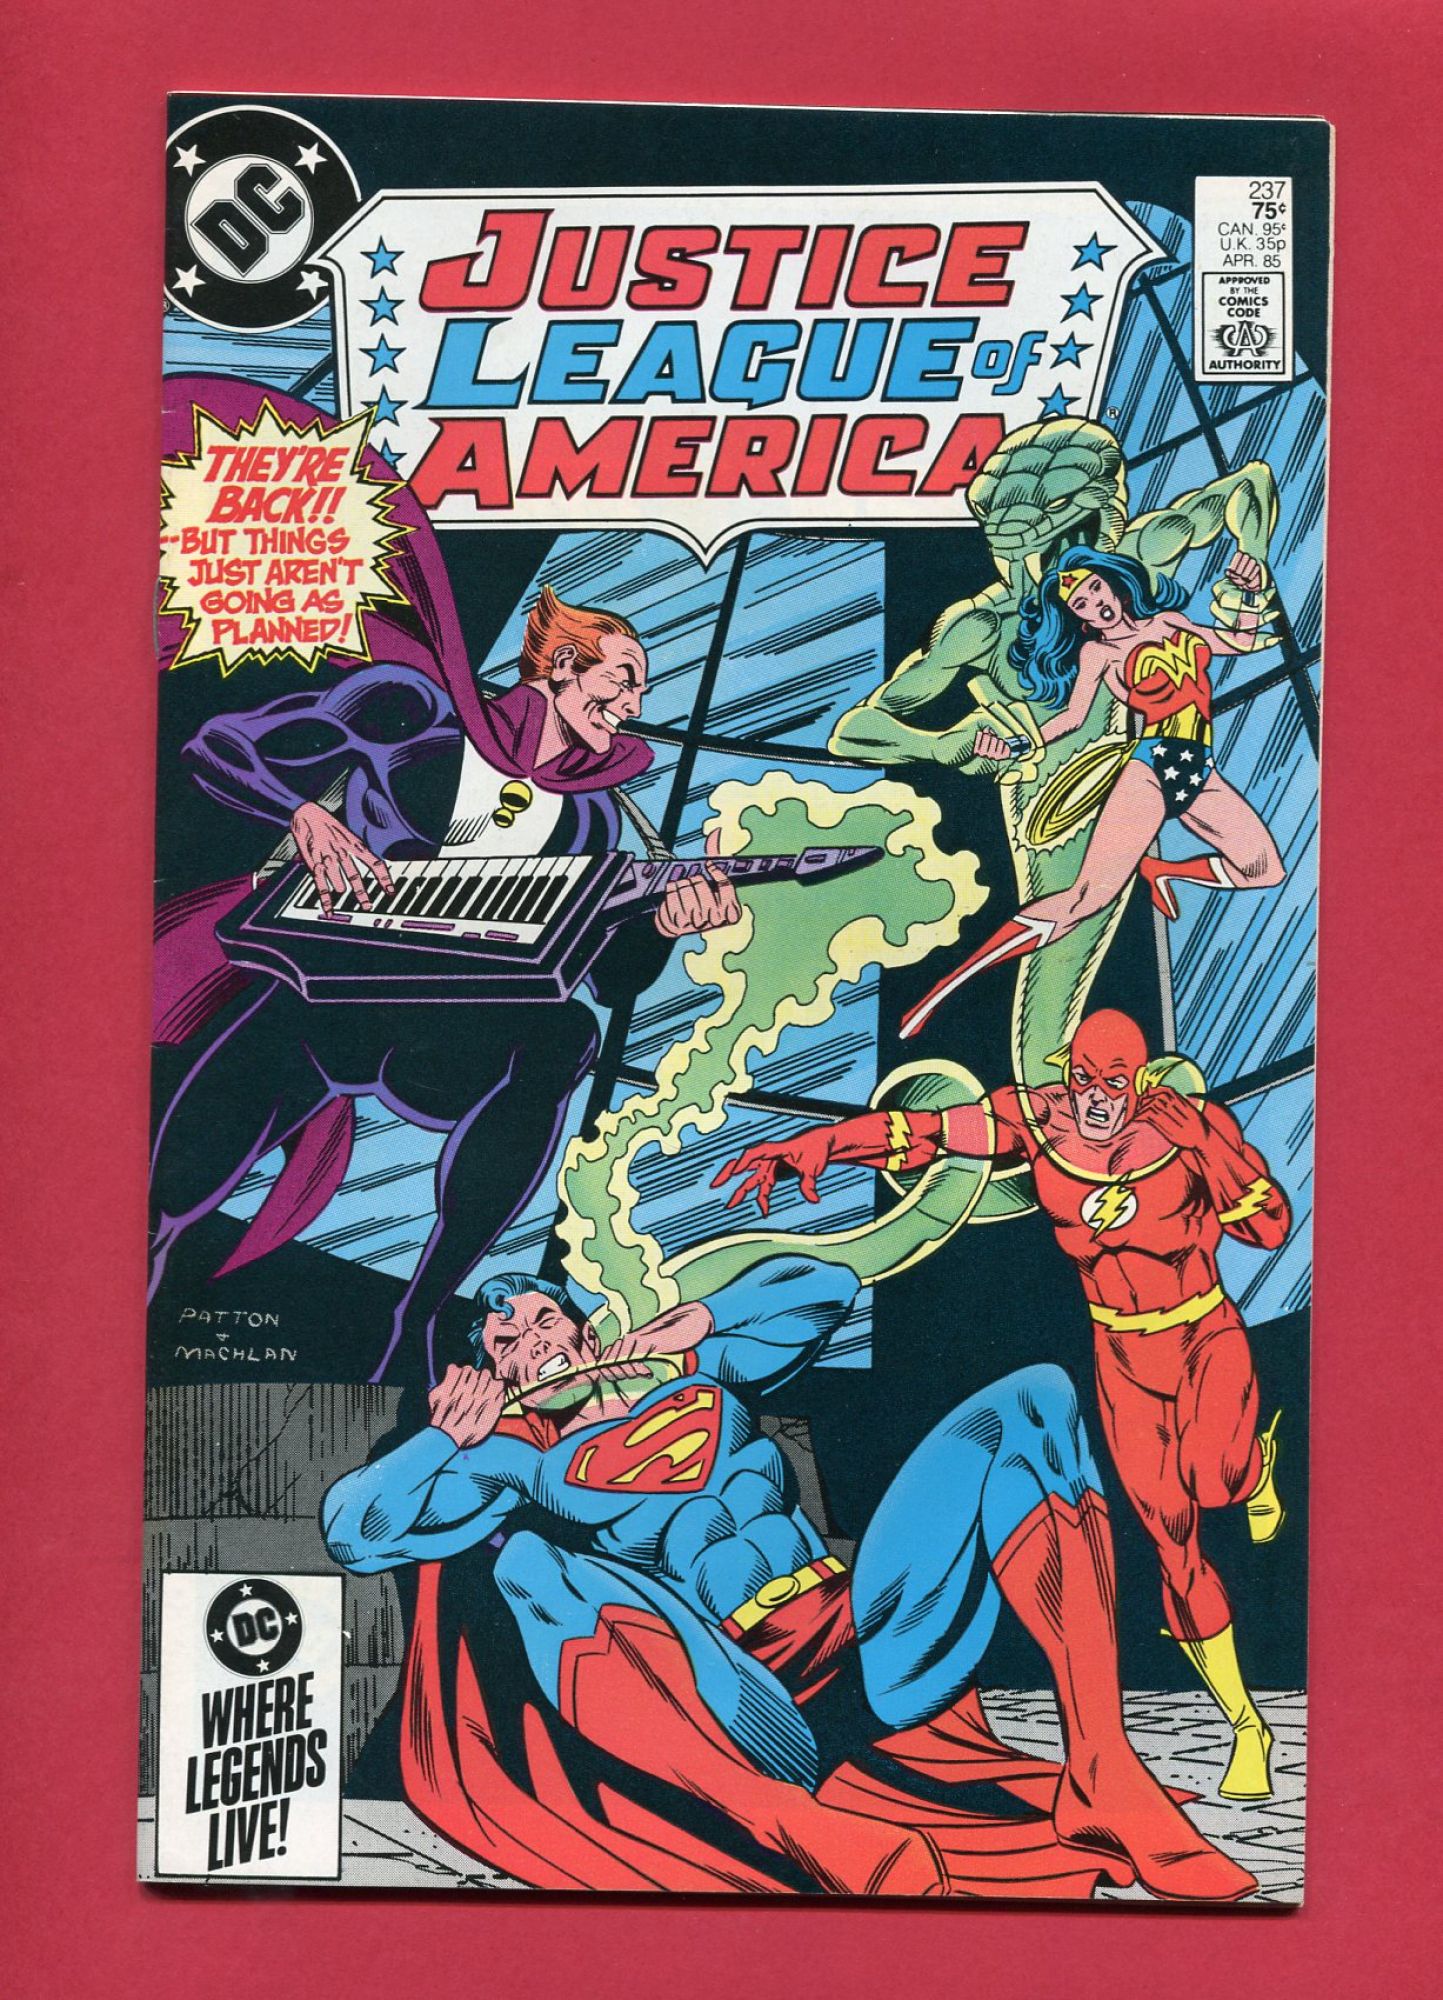 Justice League of America (Volume 1 1960) #237, Apr 1985, 9.2 NM-